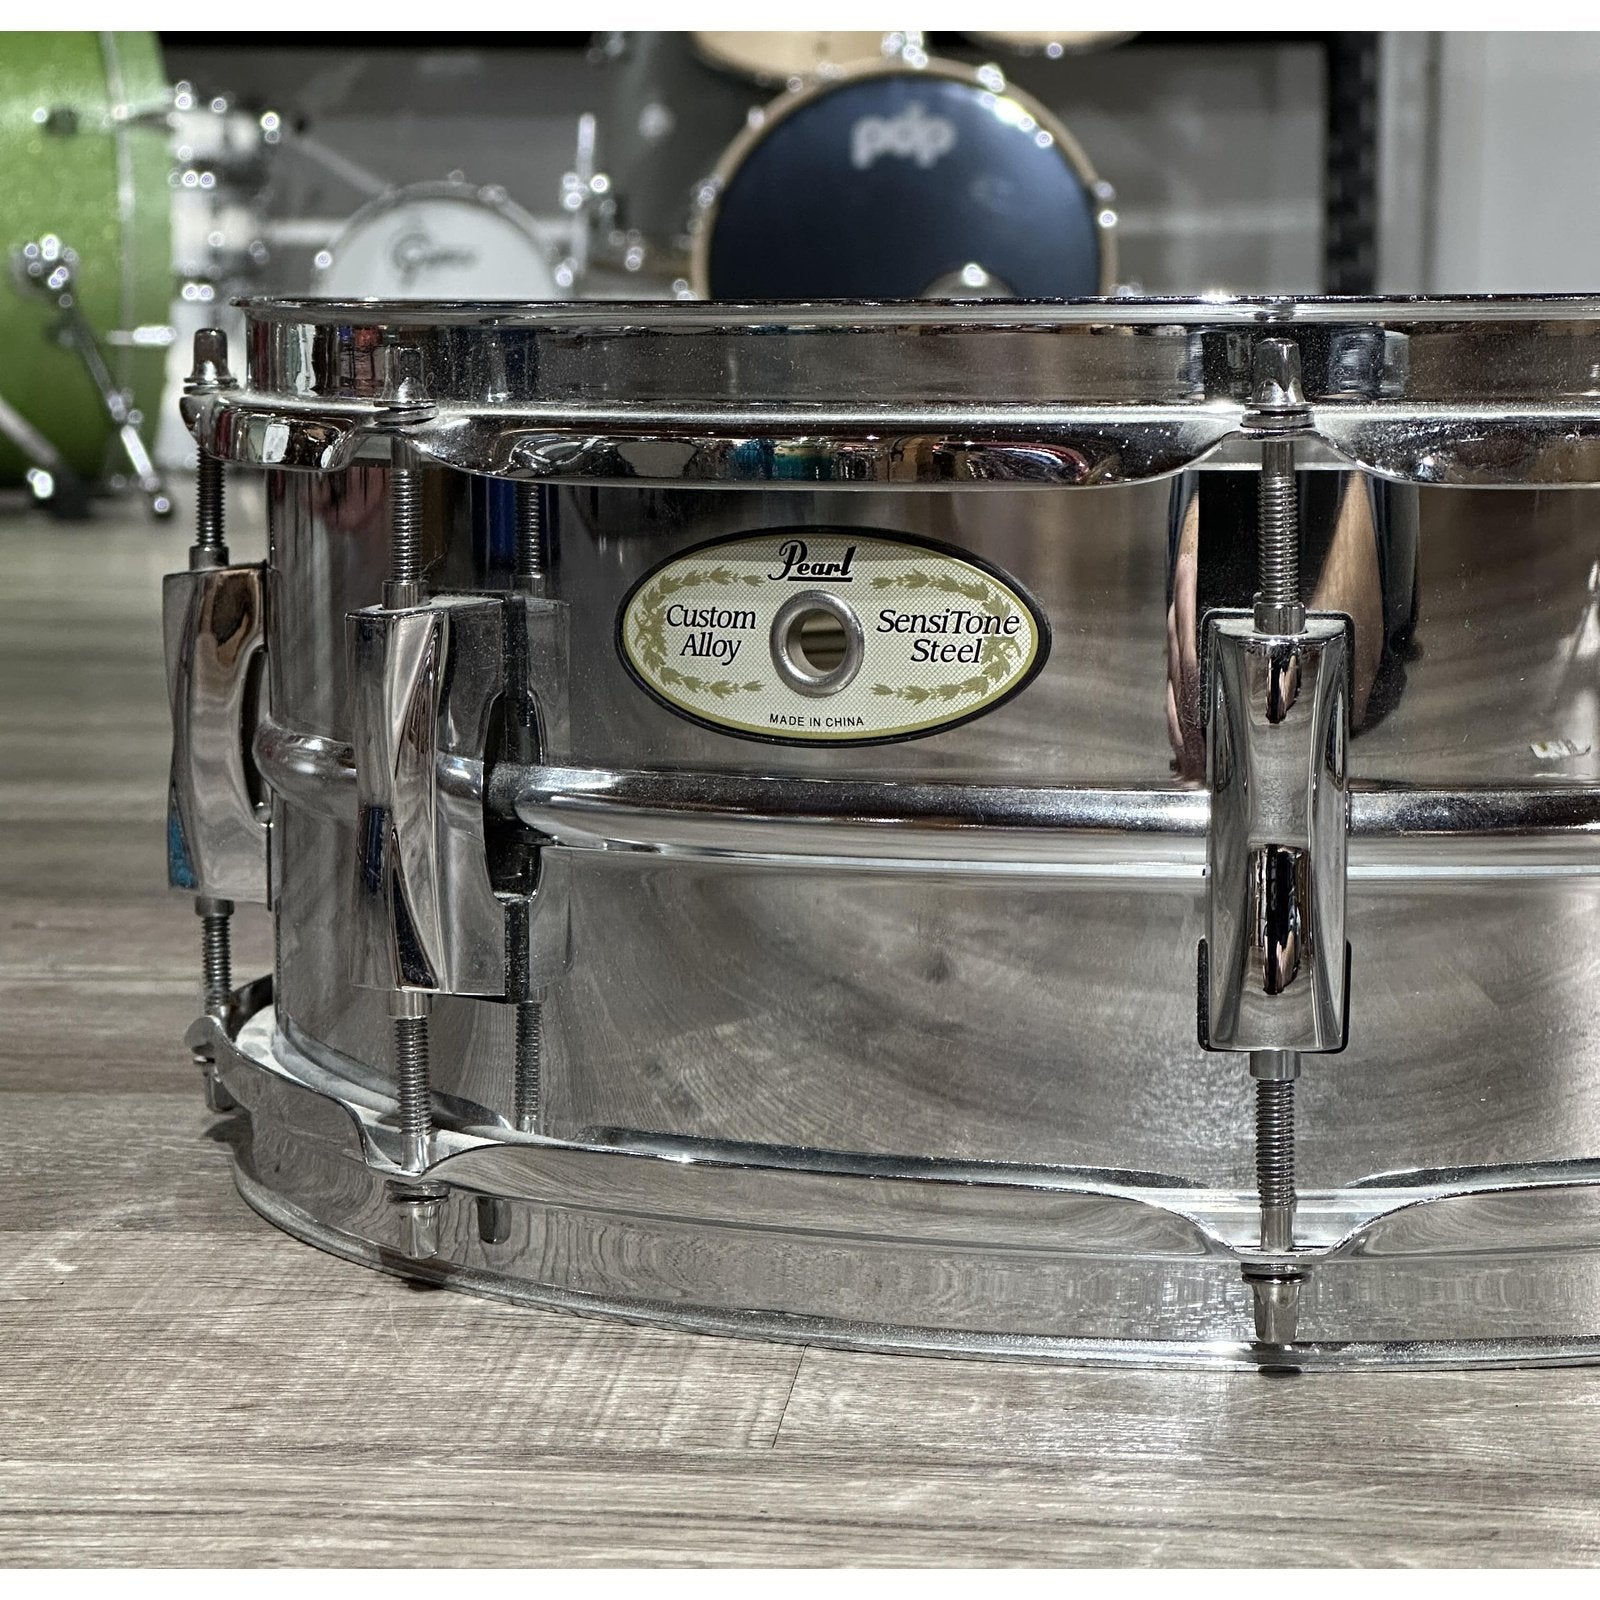 Used Pearl Sensitone Steel Custom Alloy Snare Drum 14x5.5